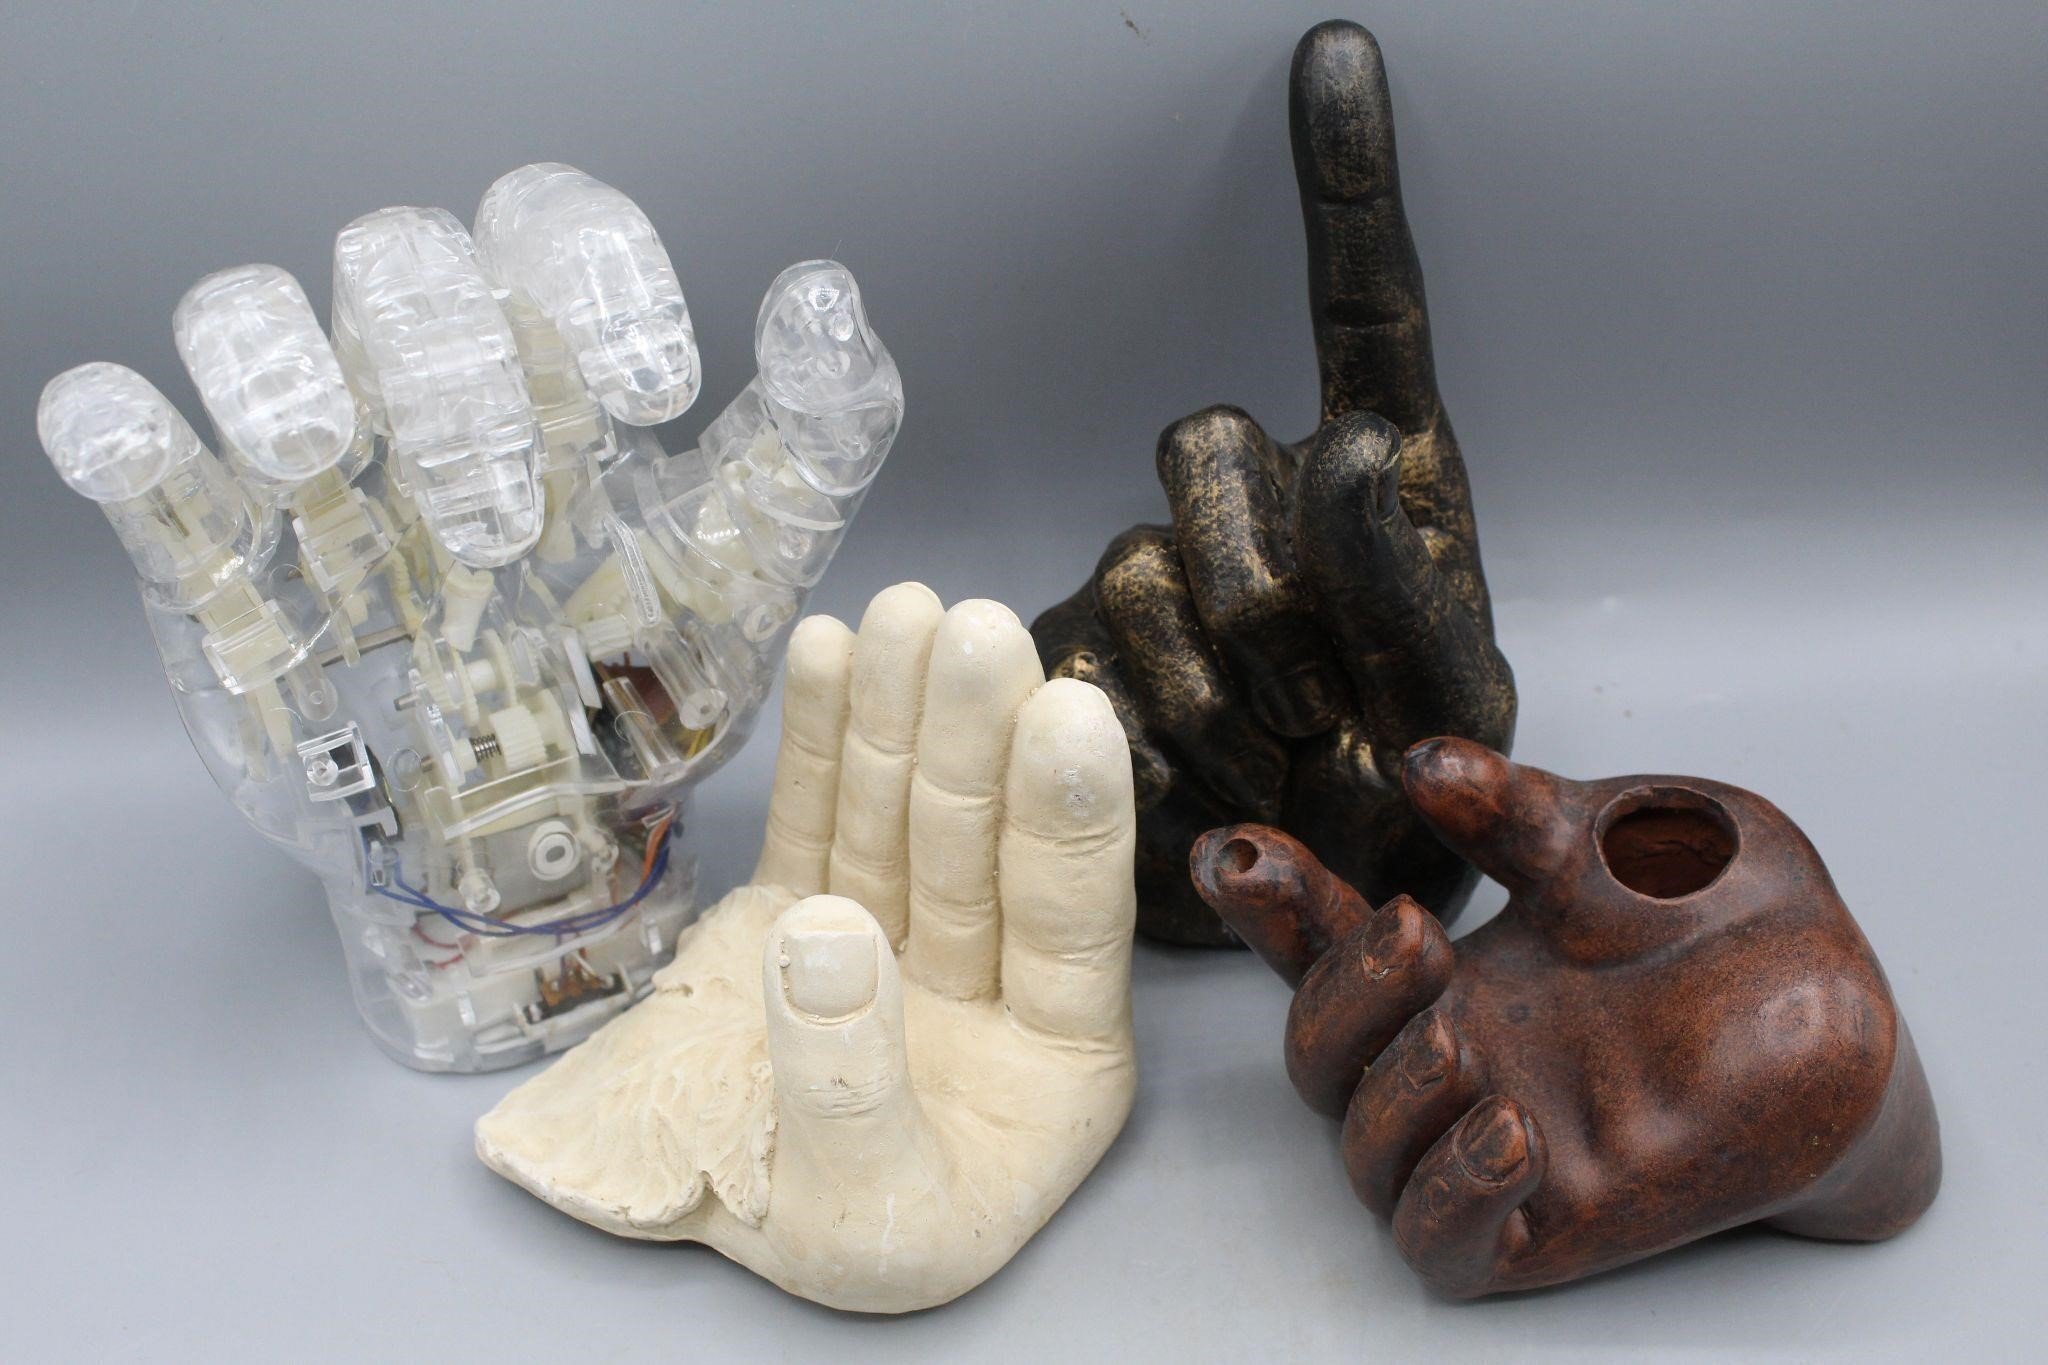 4 Musical Mechanical, Pottery, Ceramic Hands